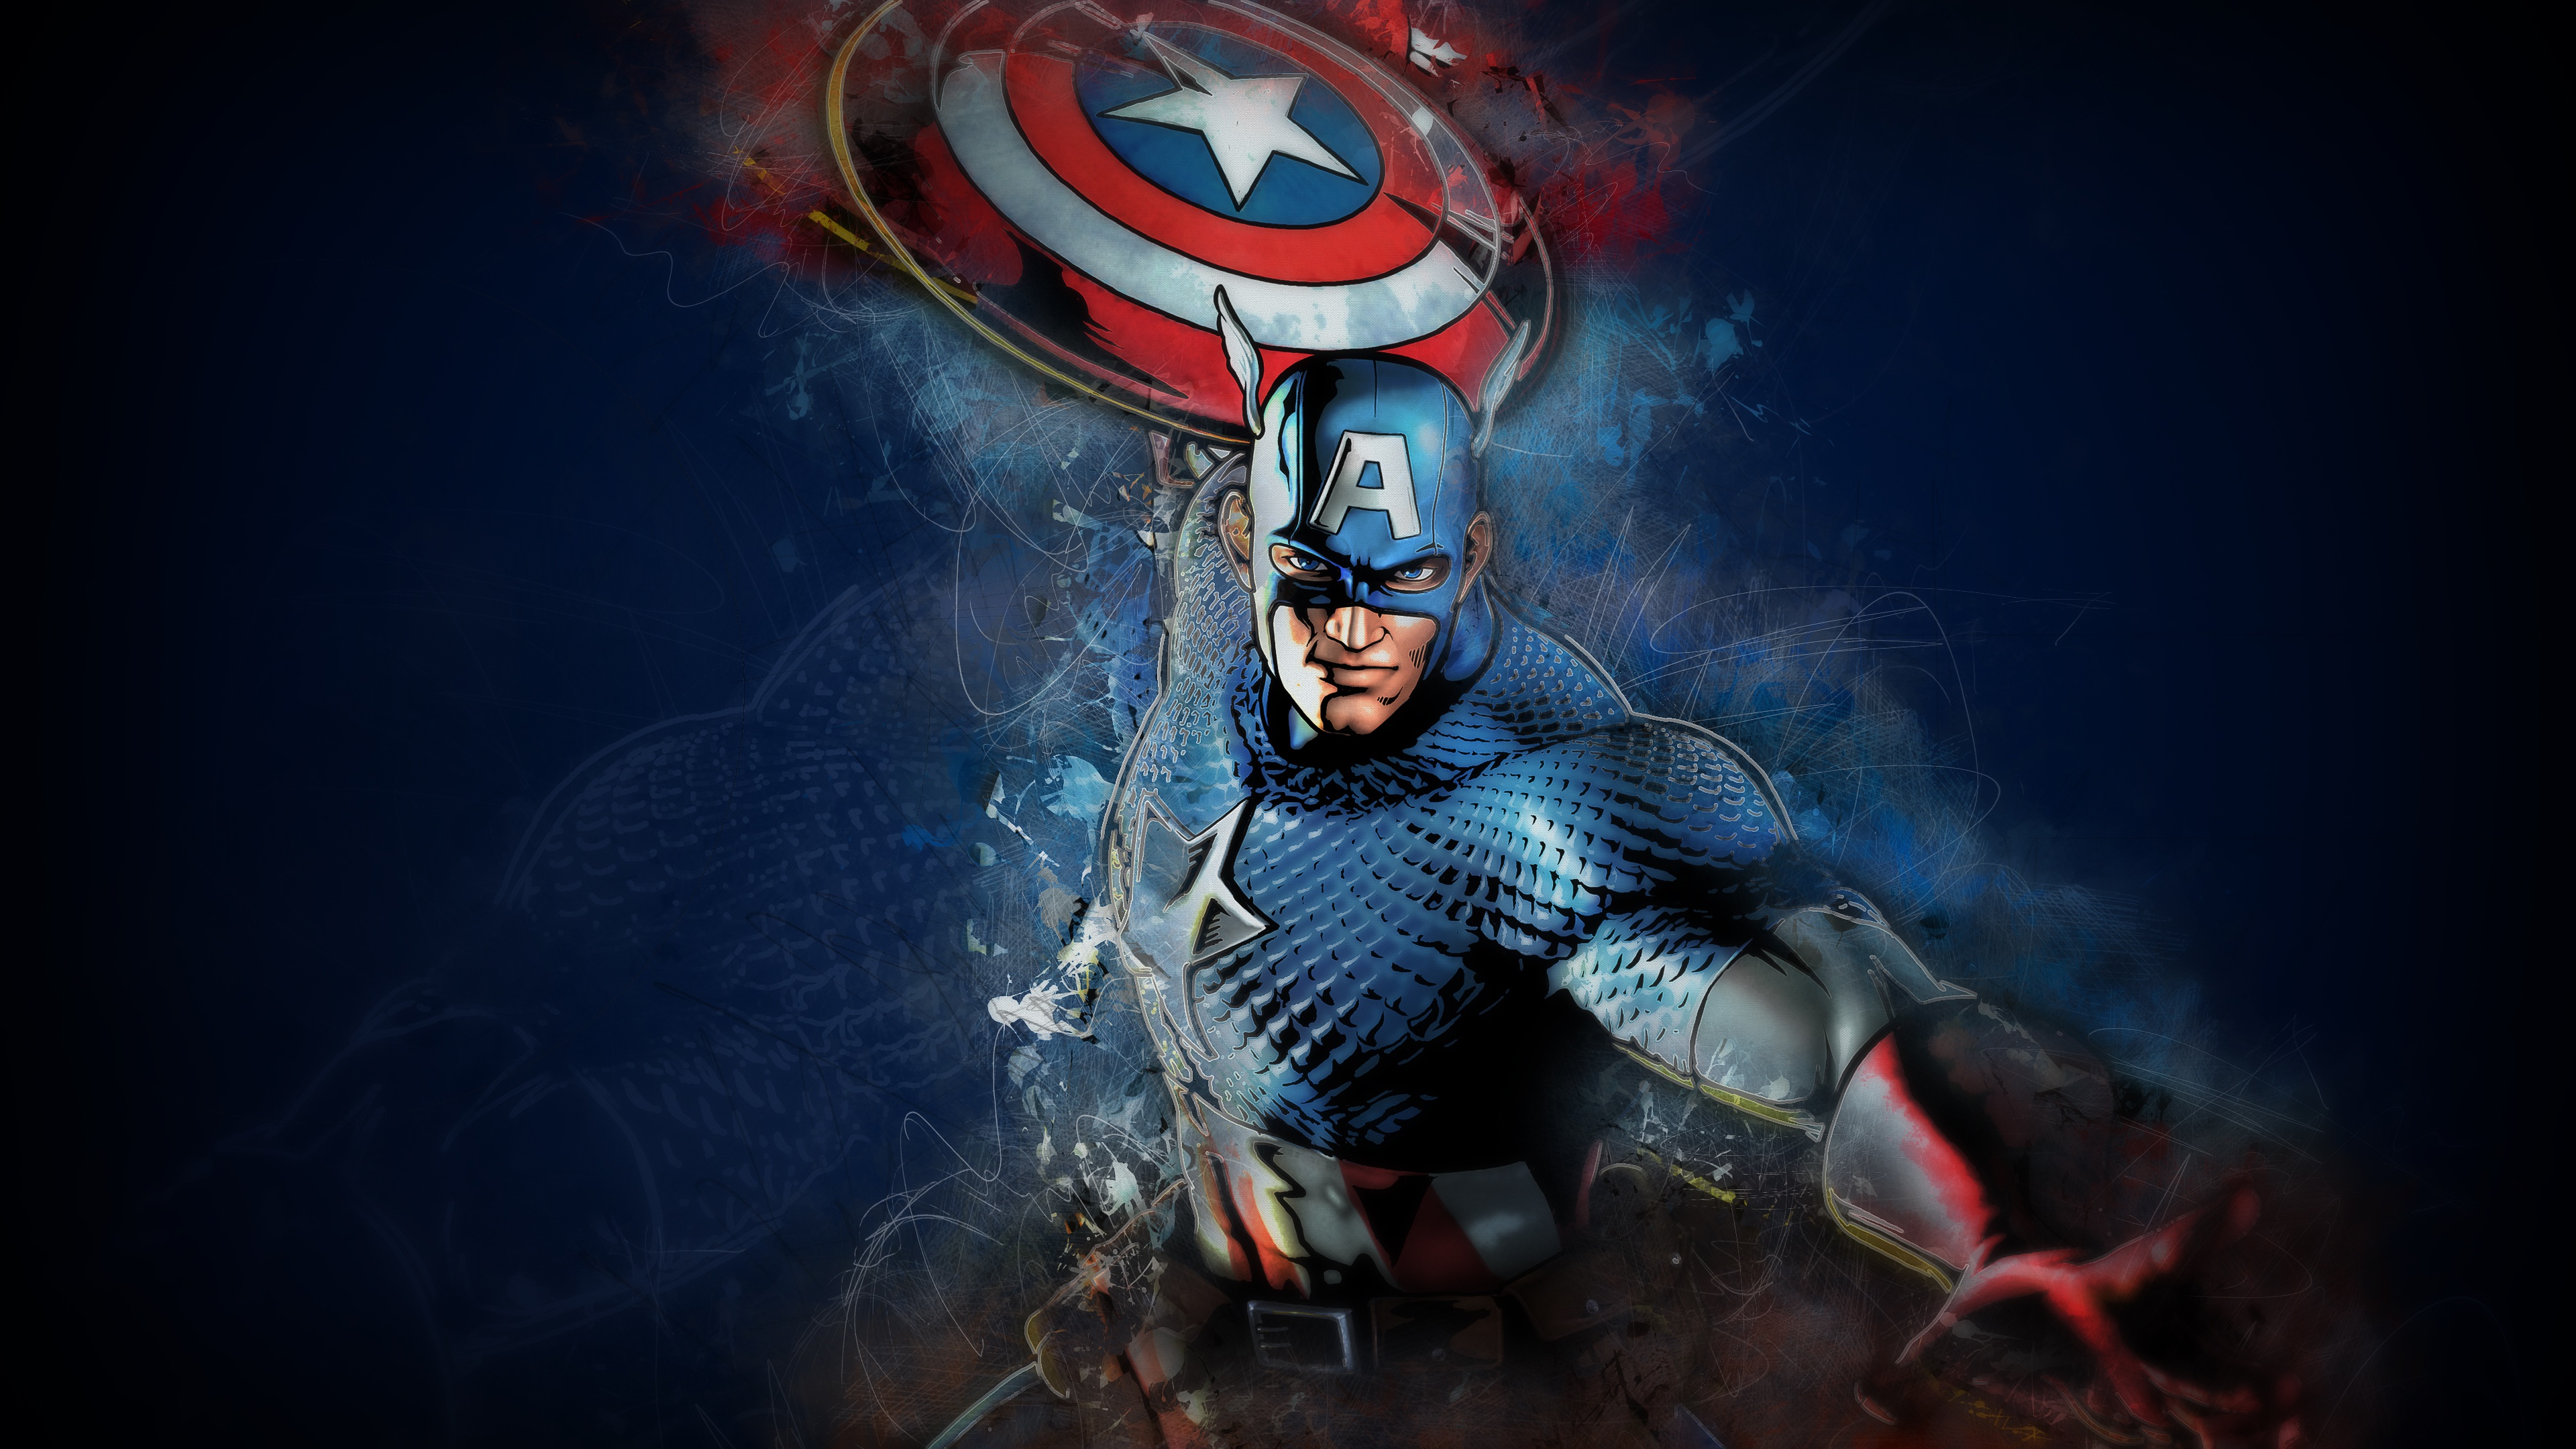 Captain America 4k Ultra HD Wallpaper Background Image